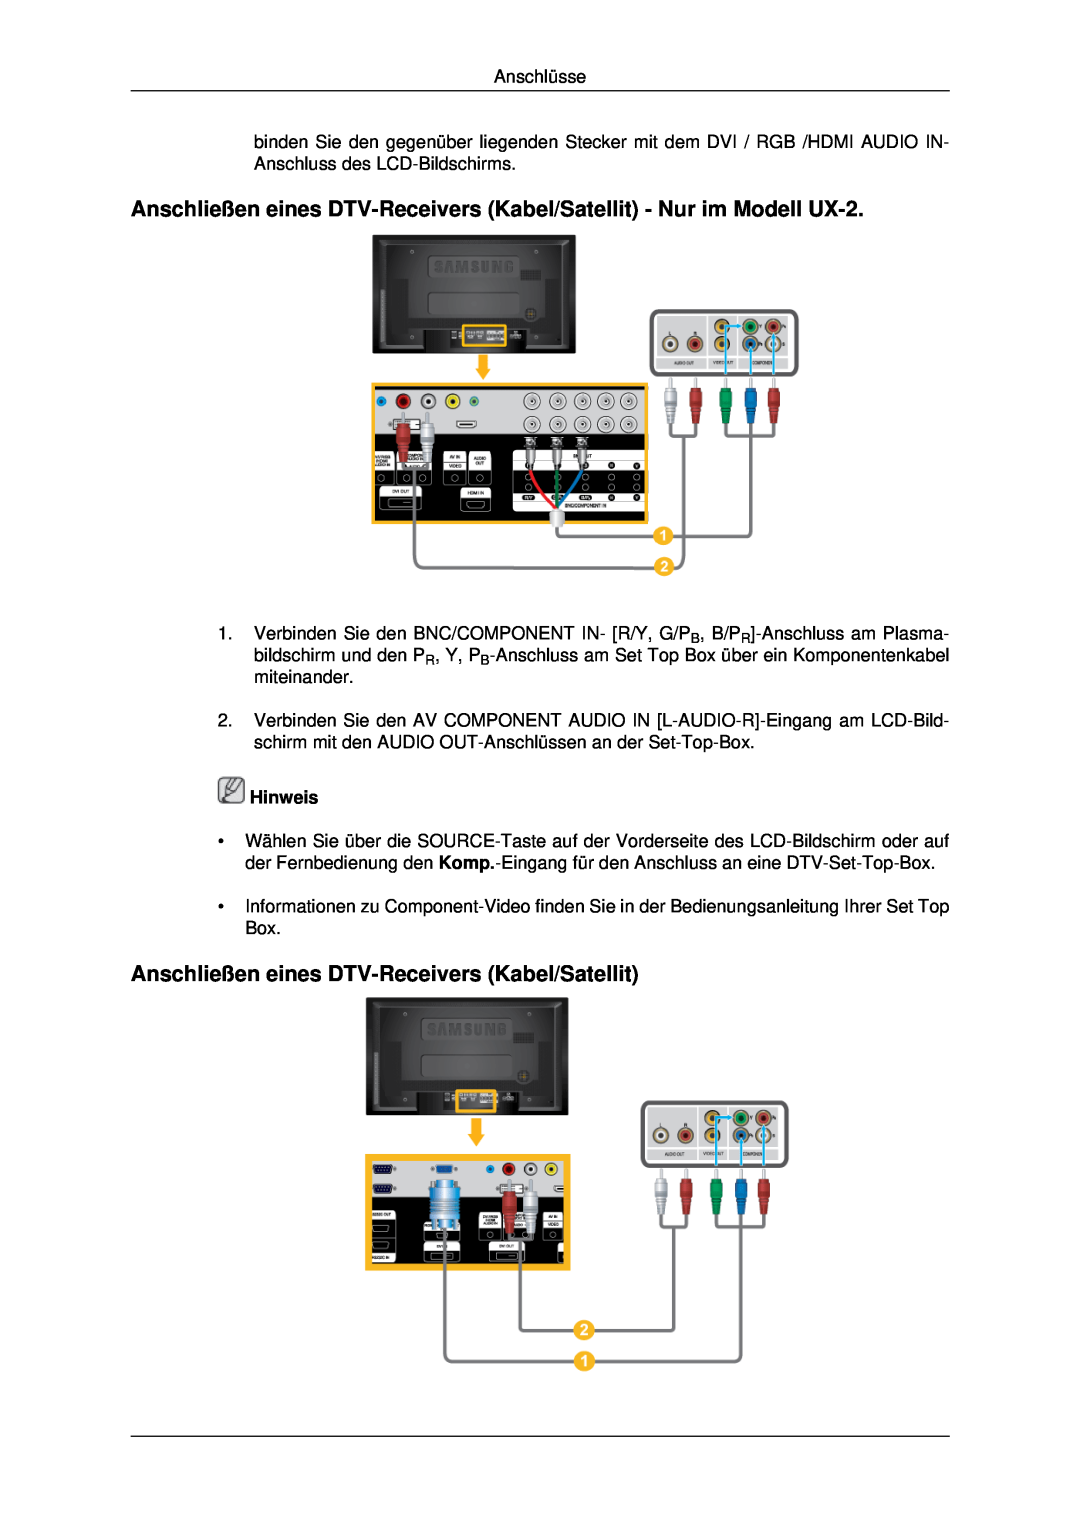 Samsung LH46MSTLBB/EN, LH46MSTABB/EN manual Anschließen eines DTV-Receivers Kabel/Satellit - Nur im Modell UX-2, Hinweis 